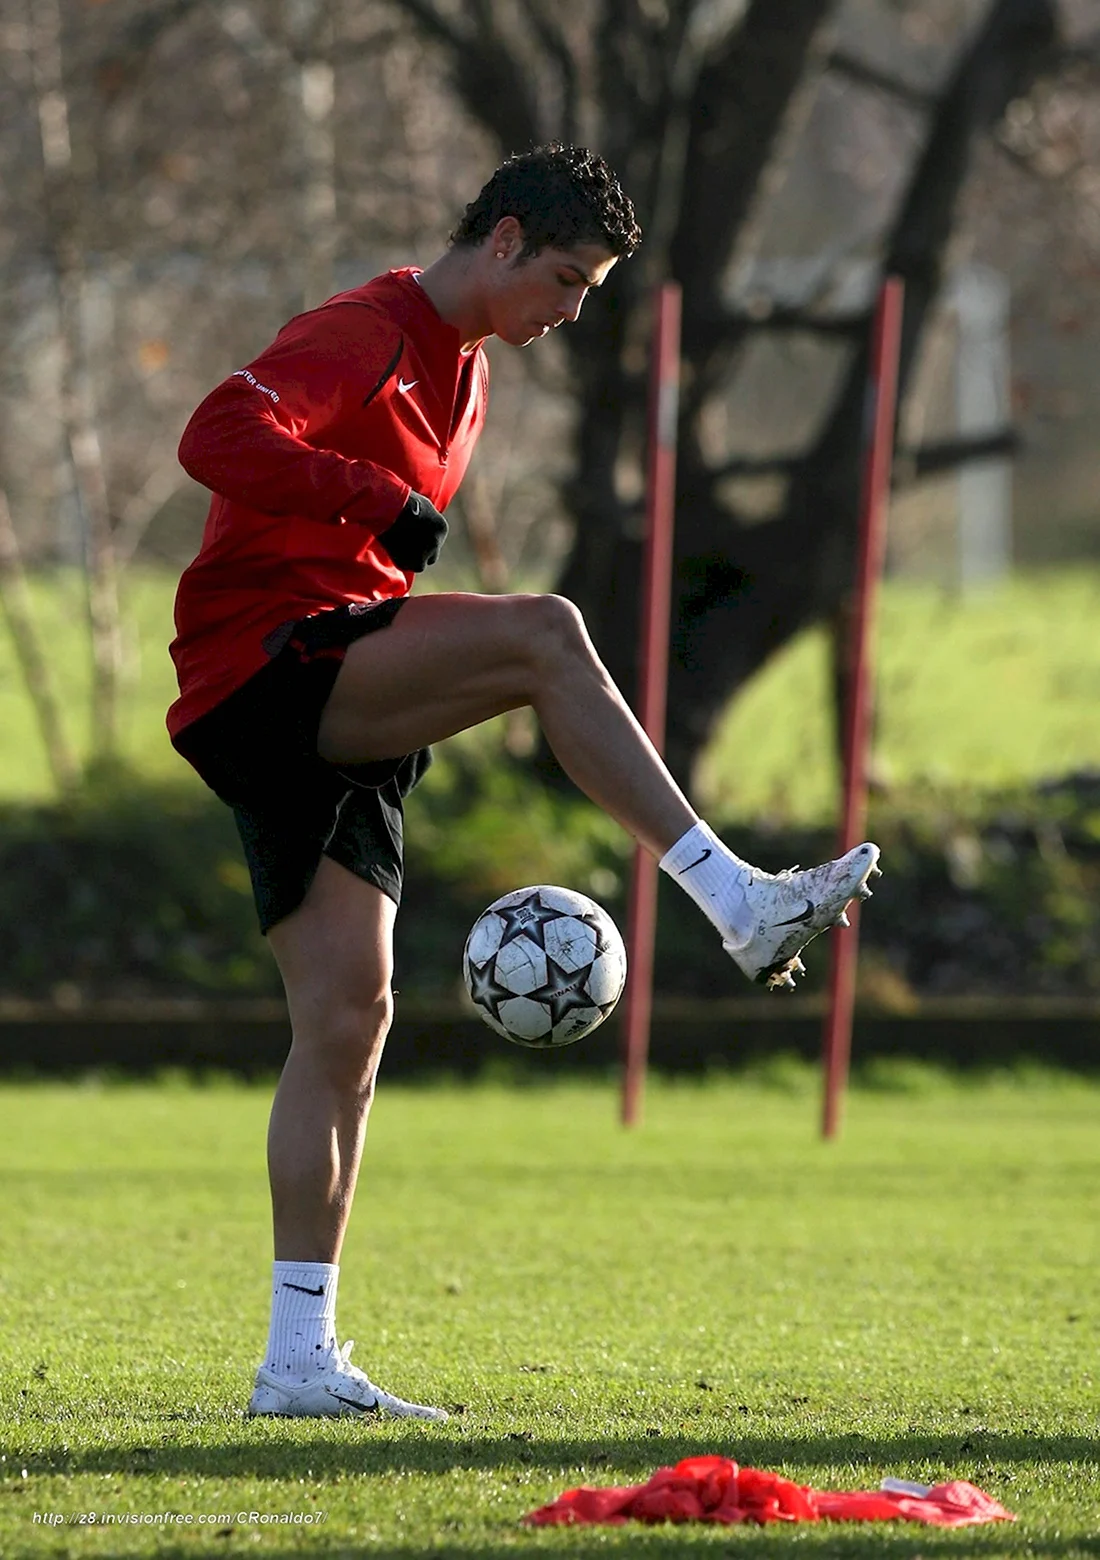 Cristiano Ronaldo skills 2003